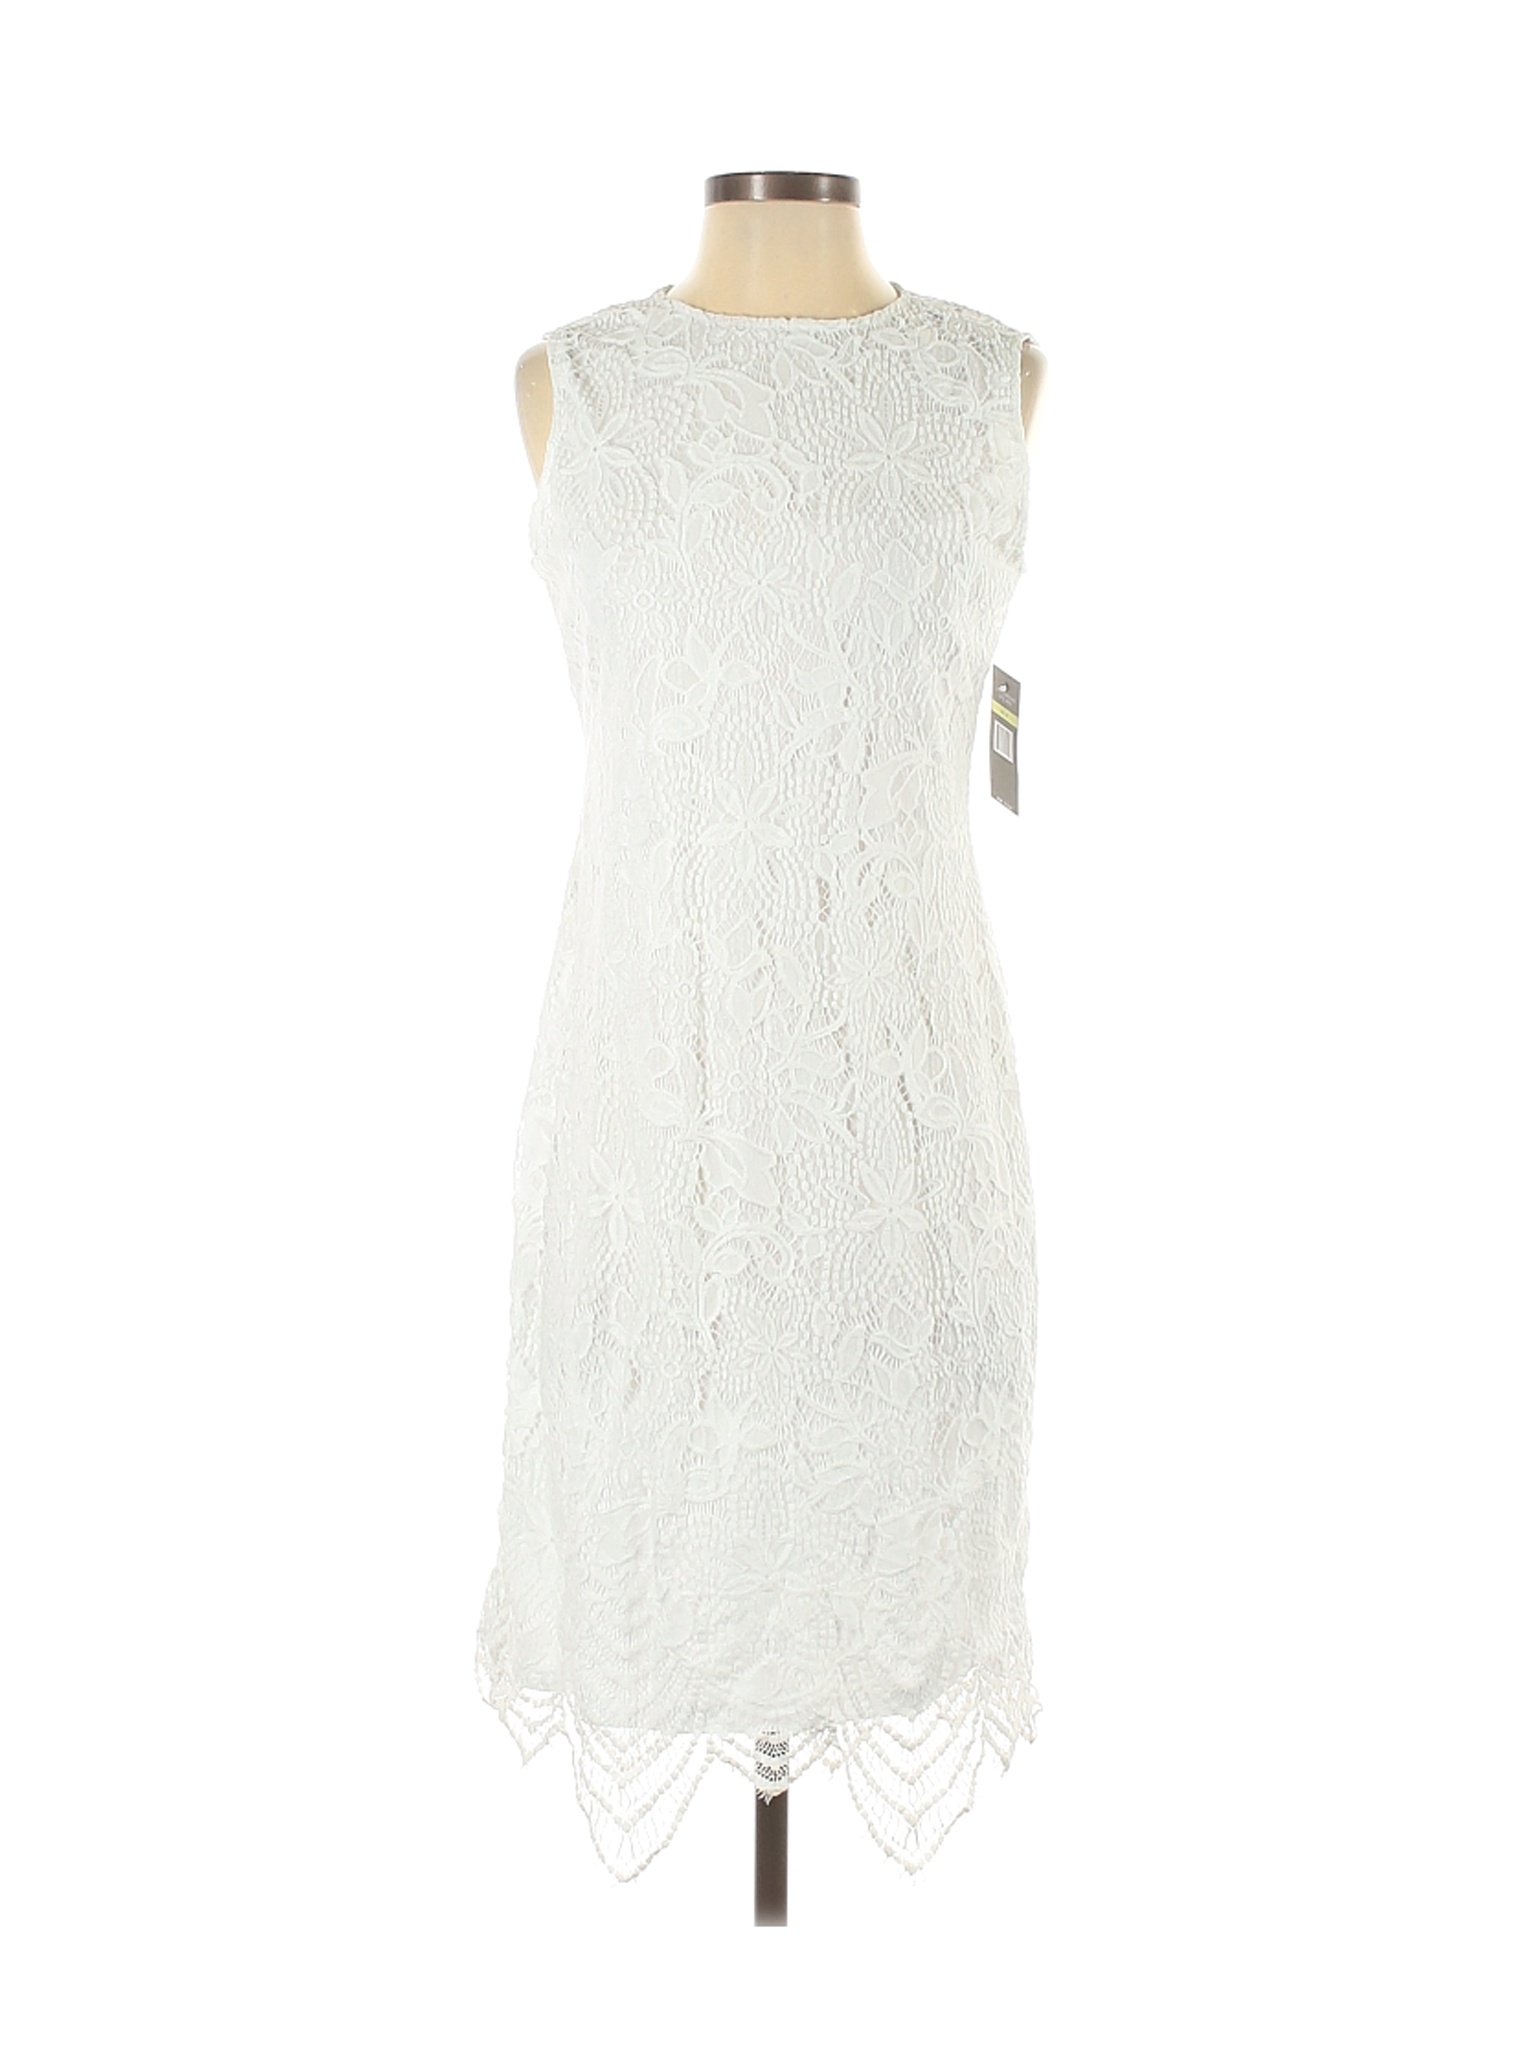 NWT Sharagano Women White Casual Dress 4 Petites | eBay